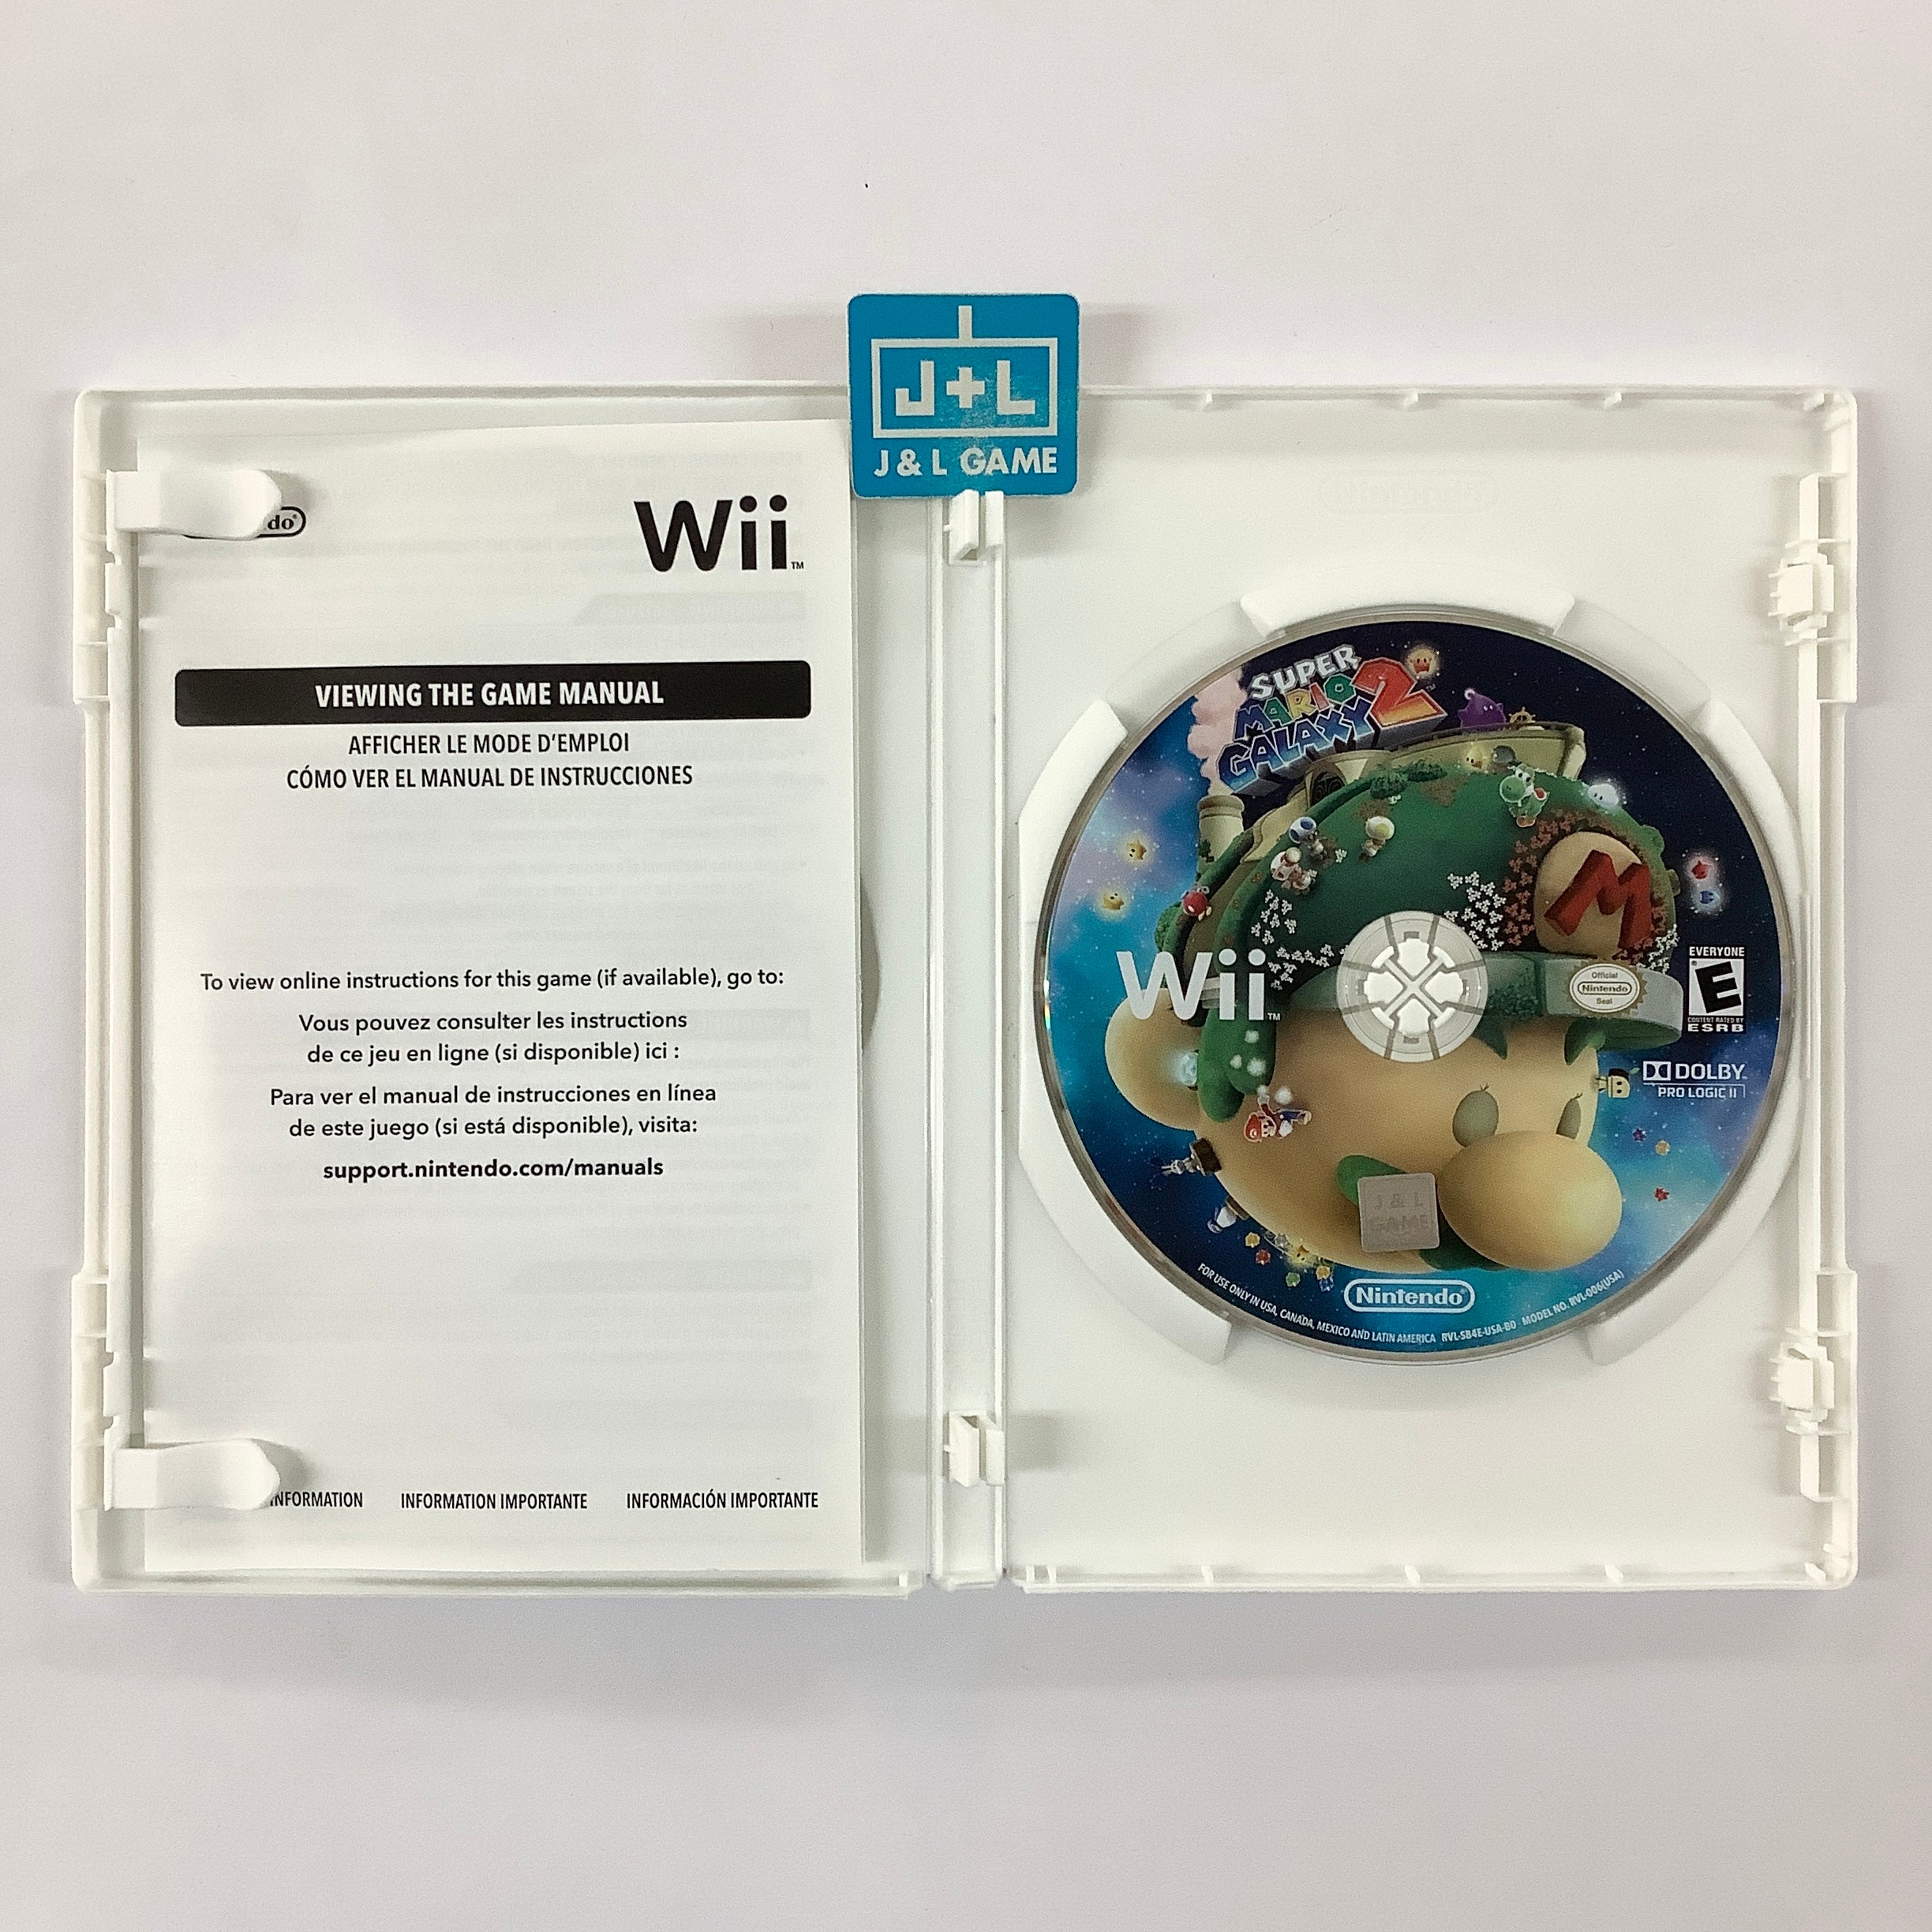 Super Mario Galaxy 2 (Nintendo Selects) - Nintendo Wii [Pre-Owned] Video Games Nintendo   